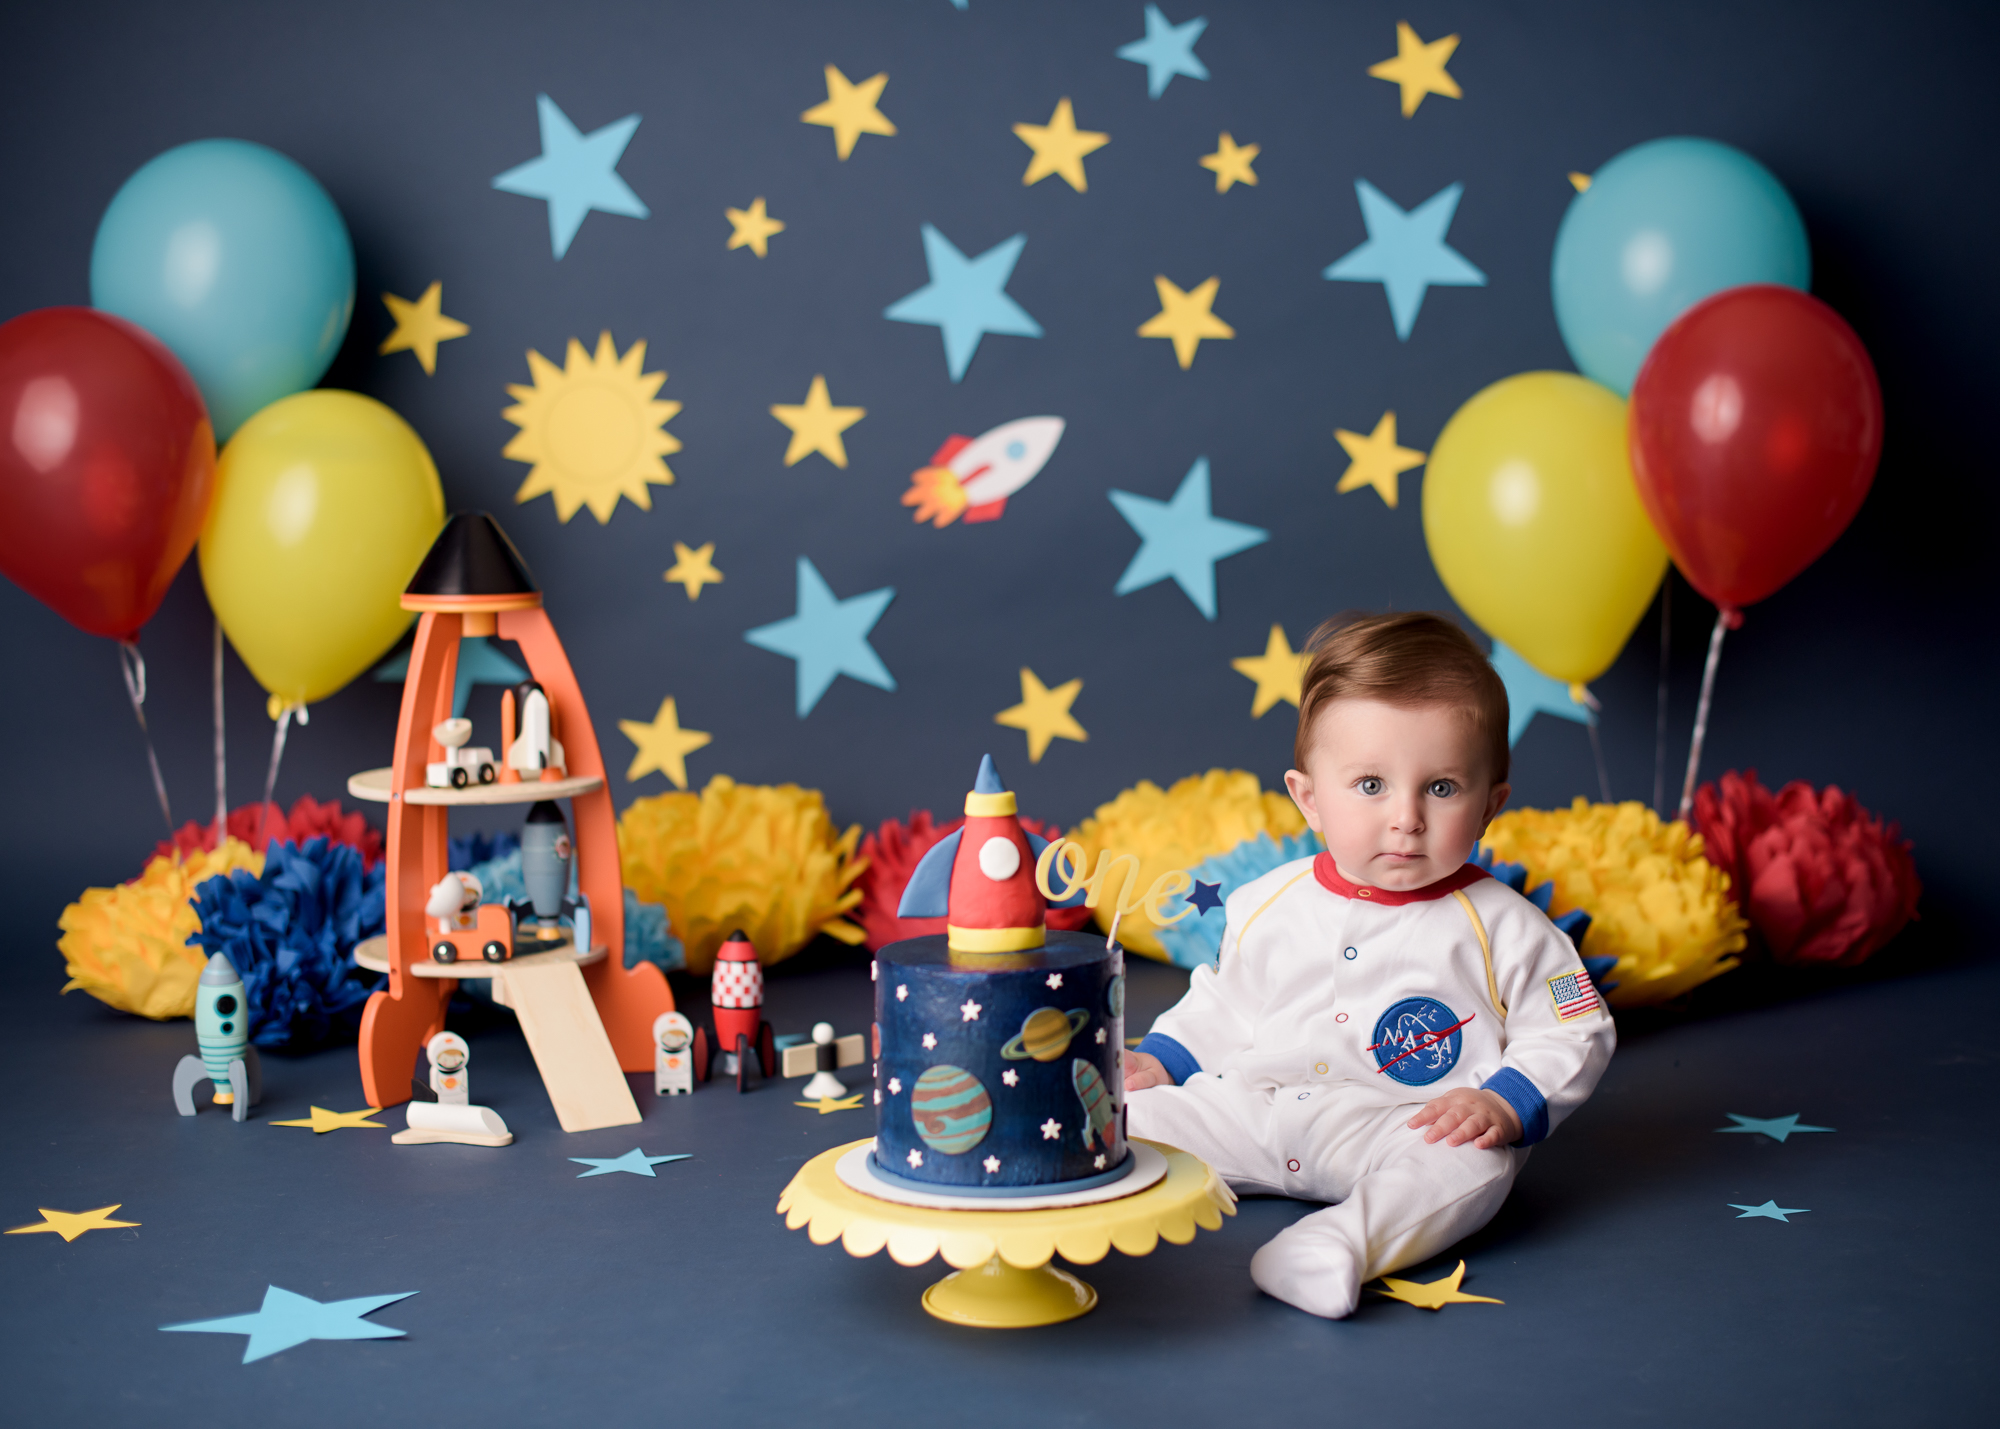 amanda dams photography cake smash astronaut spaceship universe